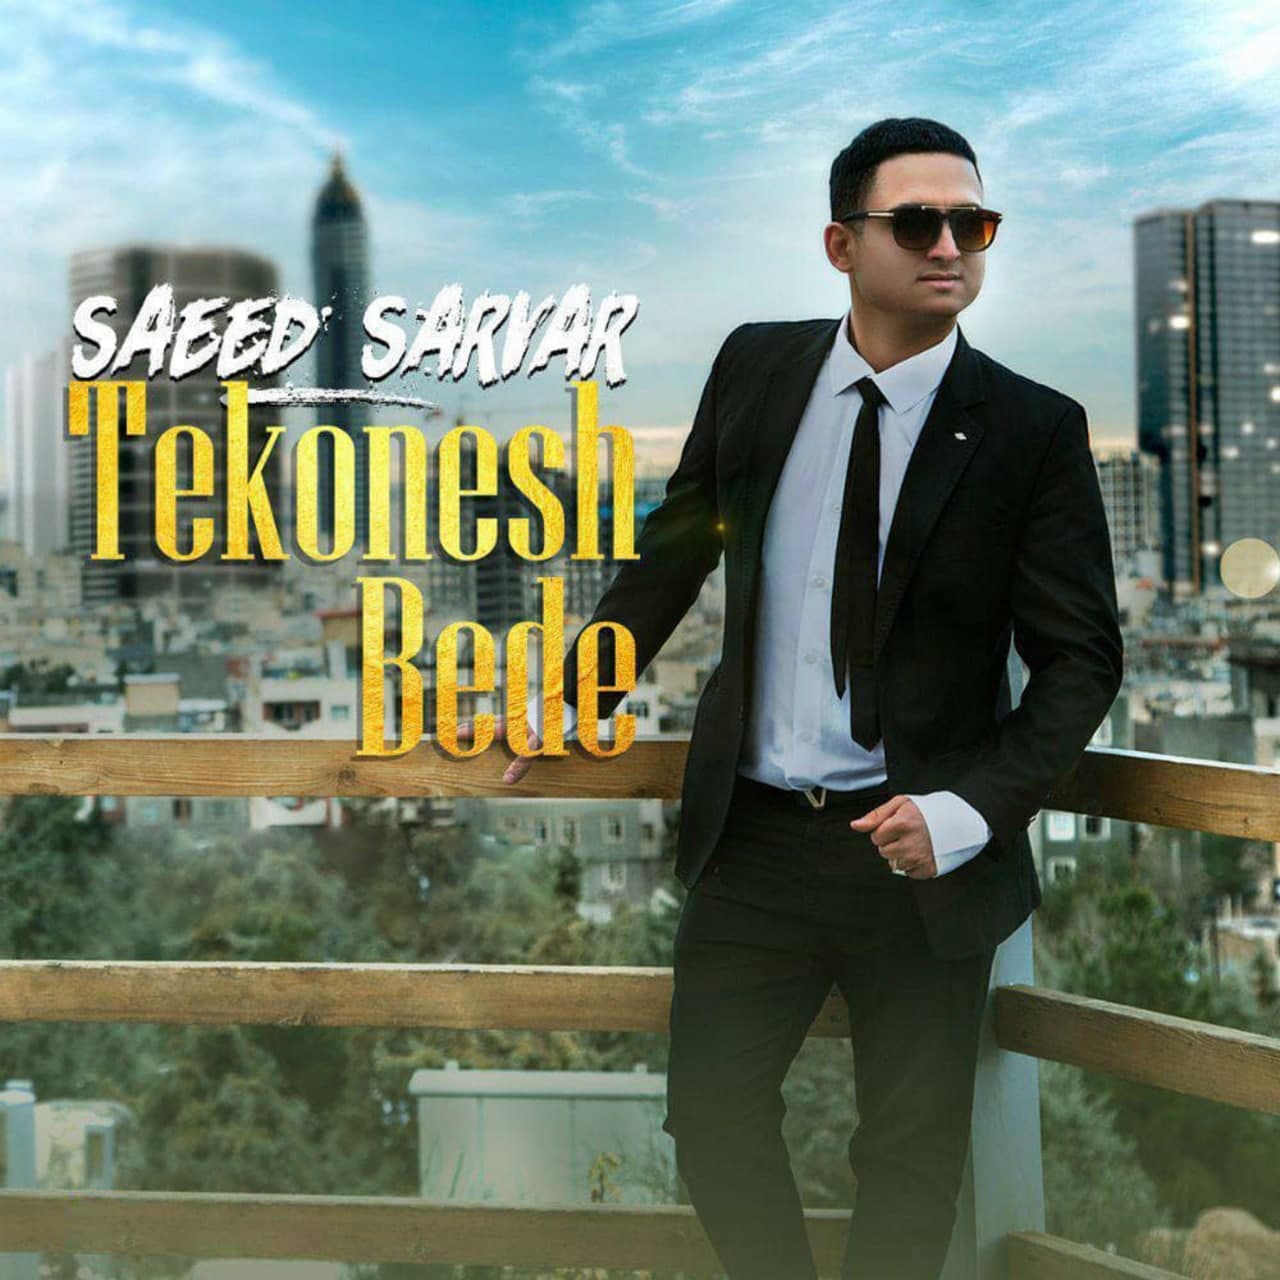  دانلود آهنگ جدید سعید سرور - تکونش بده | Download New Music By Saeed Sarvar - Tekonesh Bede